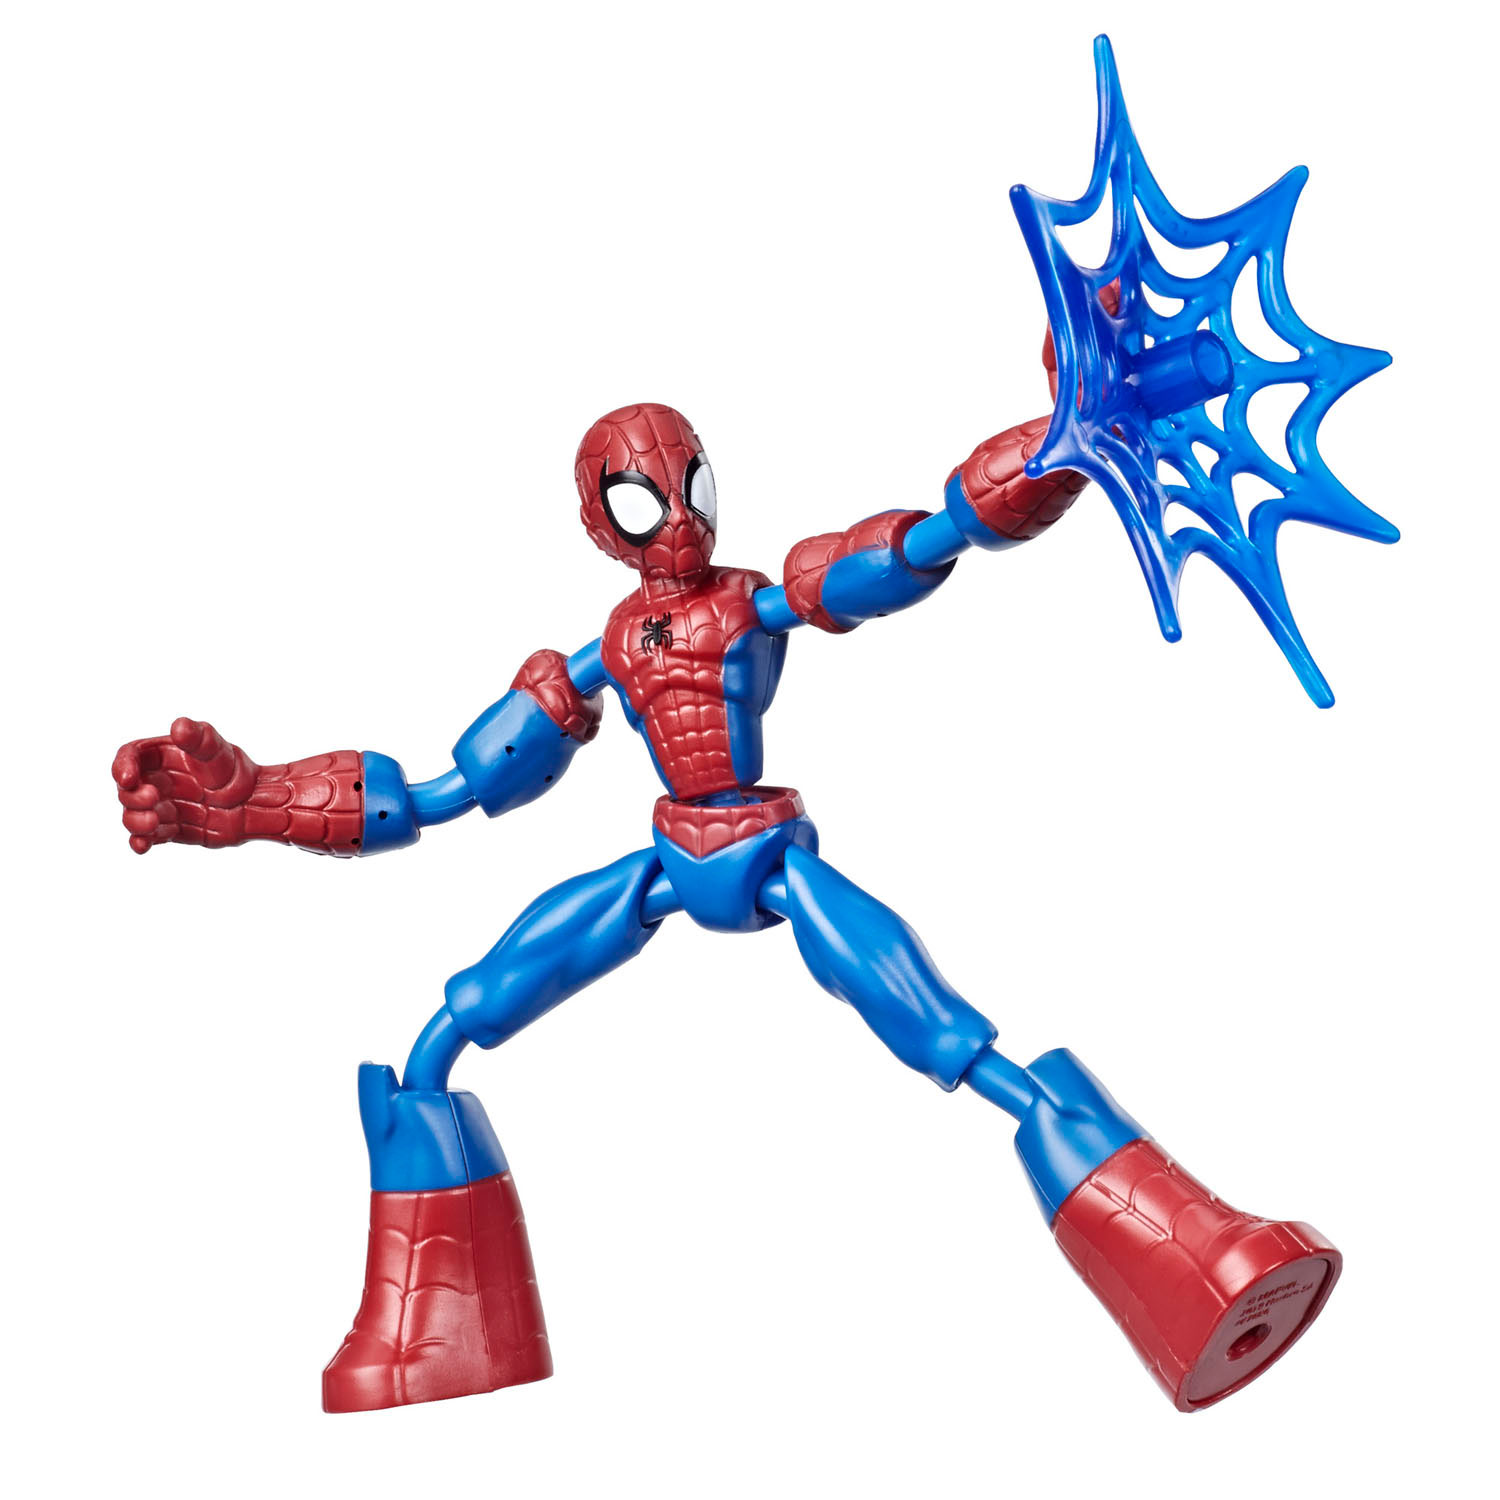 inhoudsopgave Hoes Glimlach Flexible Action Figure Avengers - Spiderman | Thimble Toys